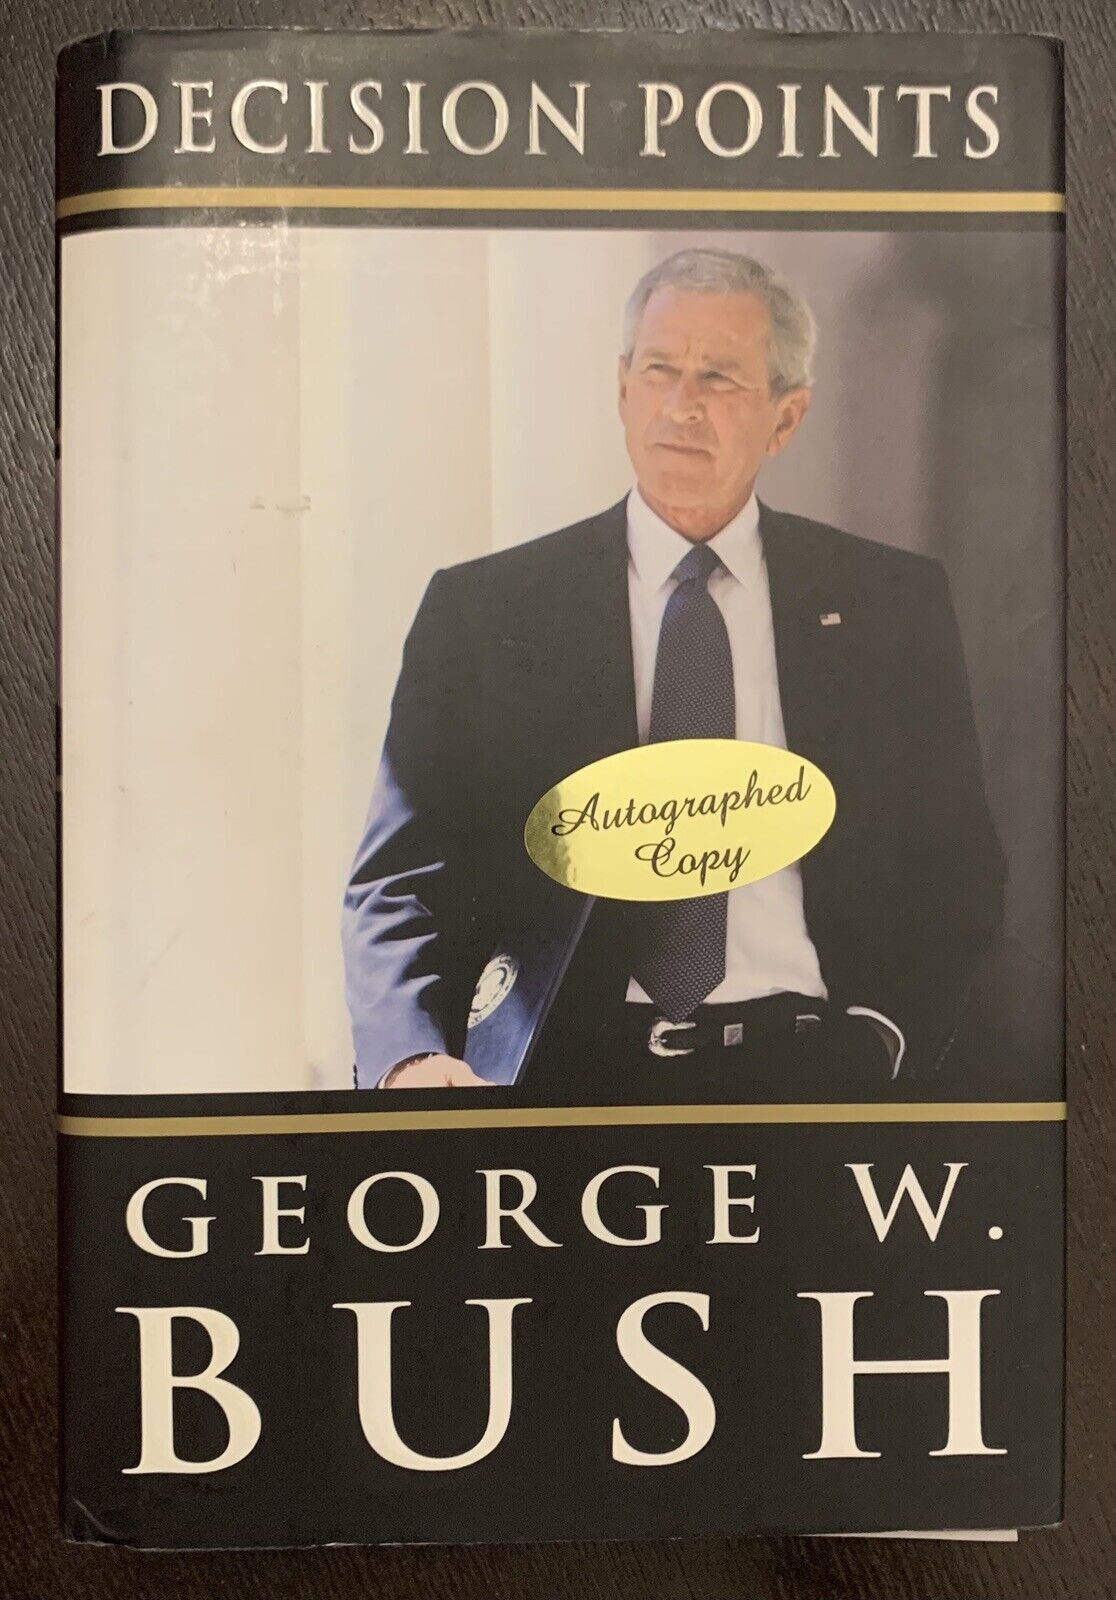 George W. Bush Signed Decision Points Book